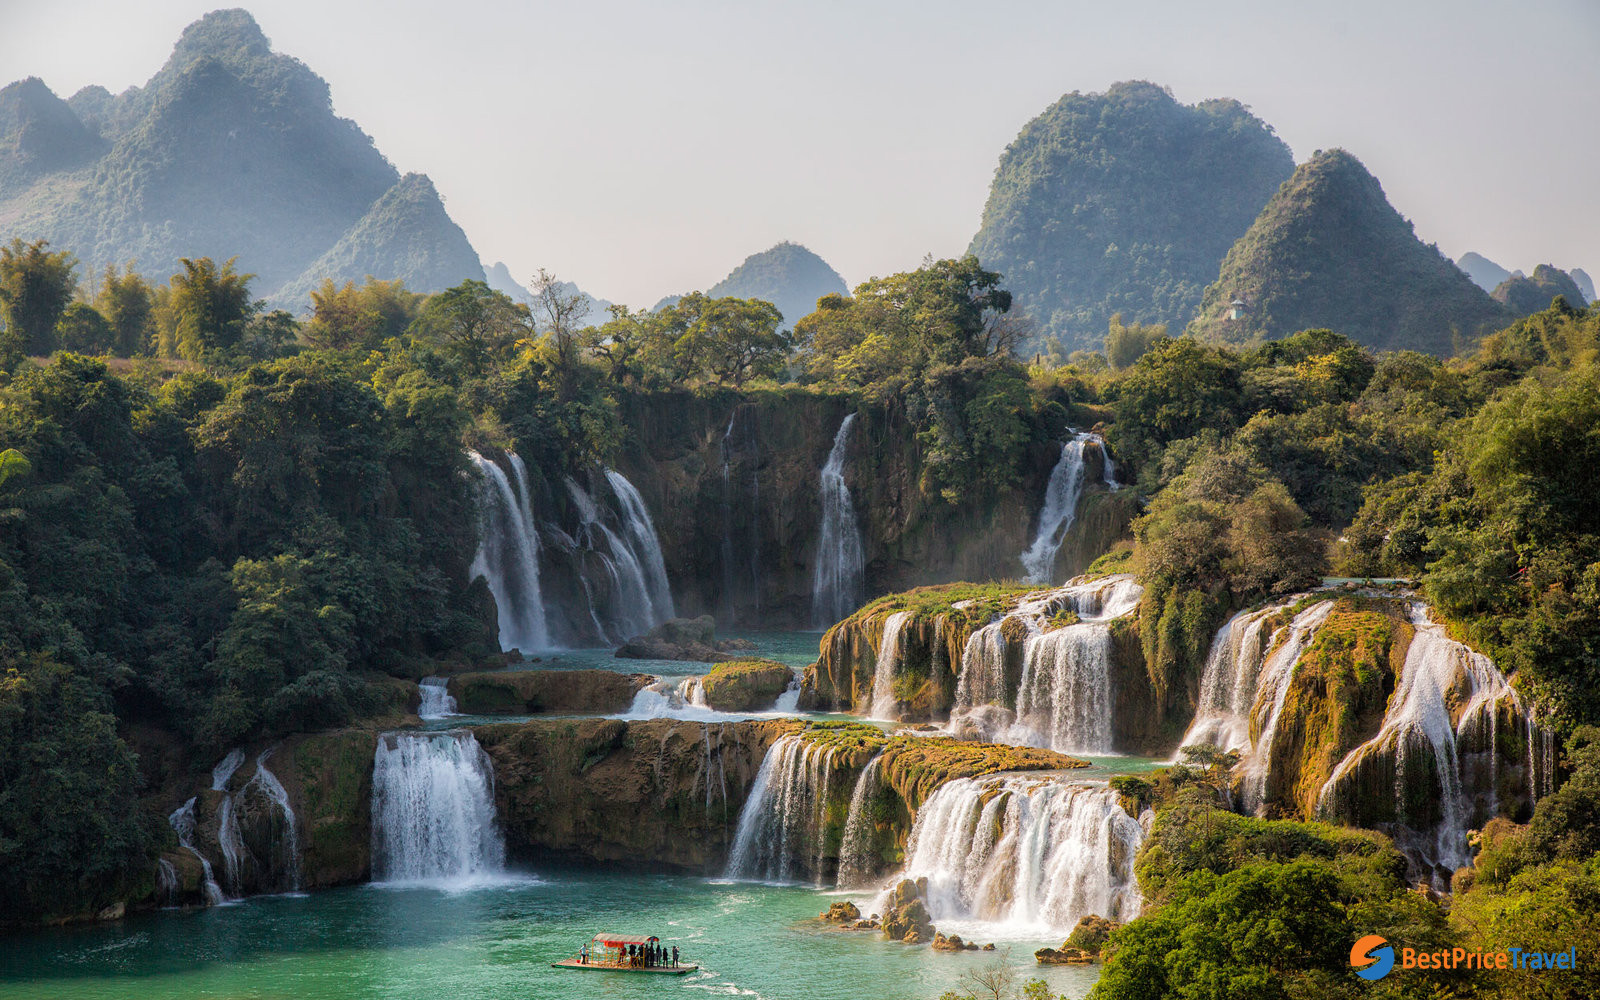 The impressive travel photo of immense Ban Gioc Waterfall